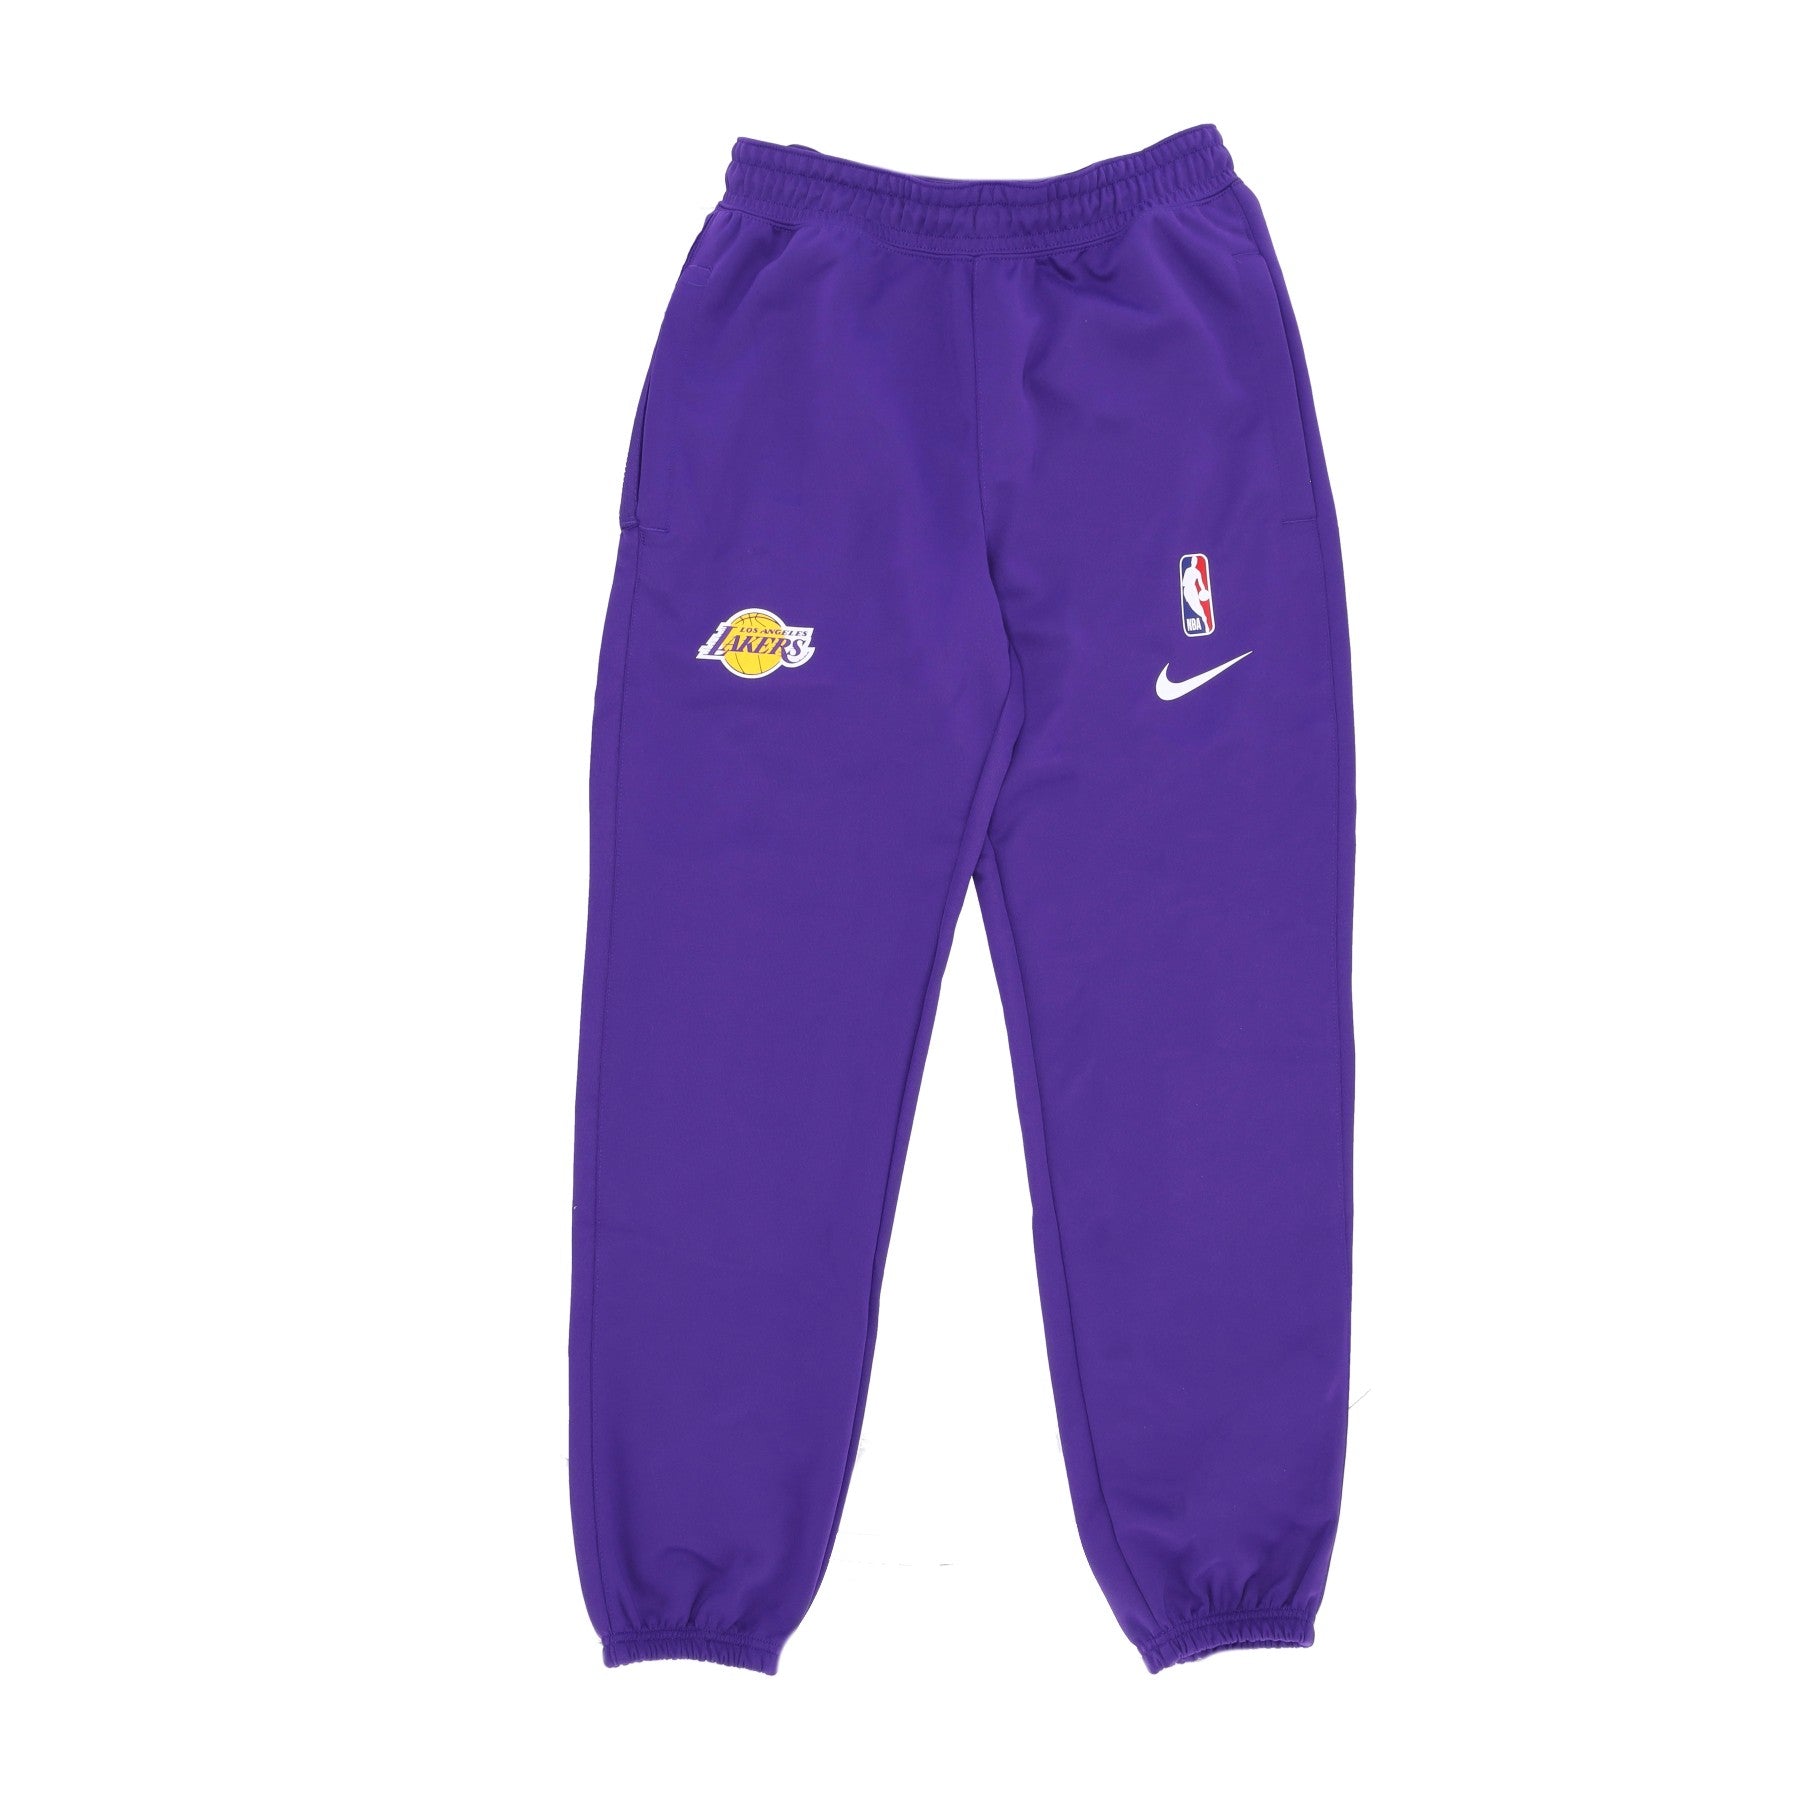 Nike Nba, Pantalone Tuta Leggero Uomo Nba Dri-fit Spotlight Pant Loslak, Field Purple